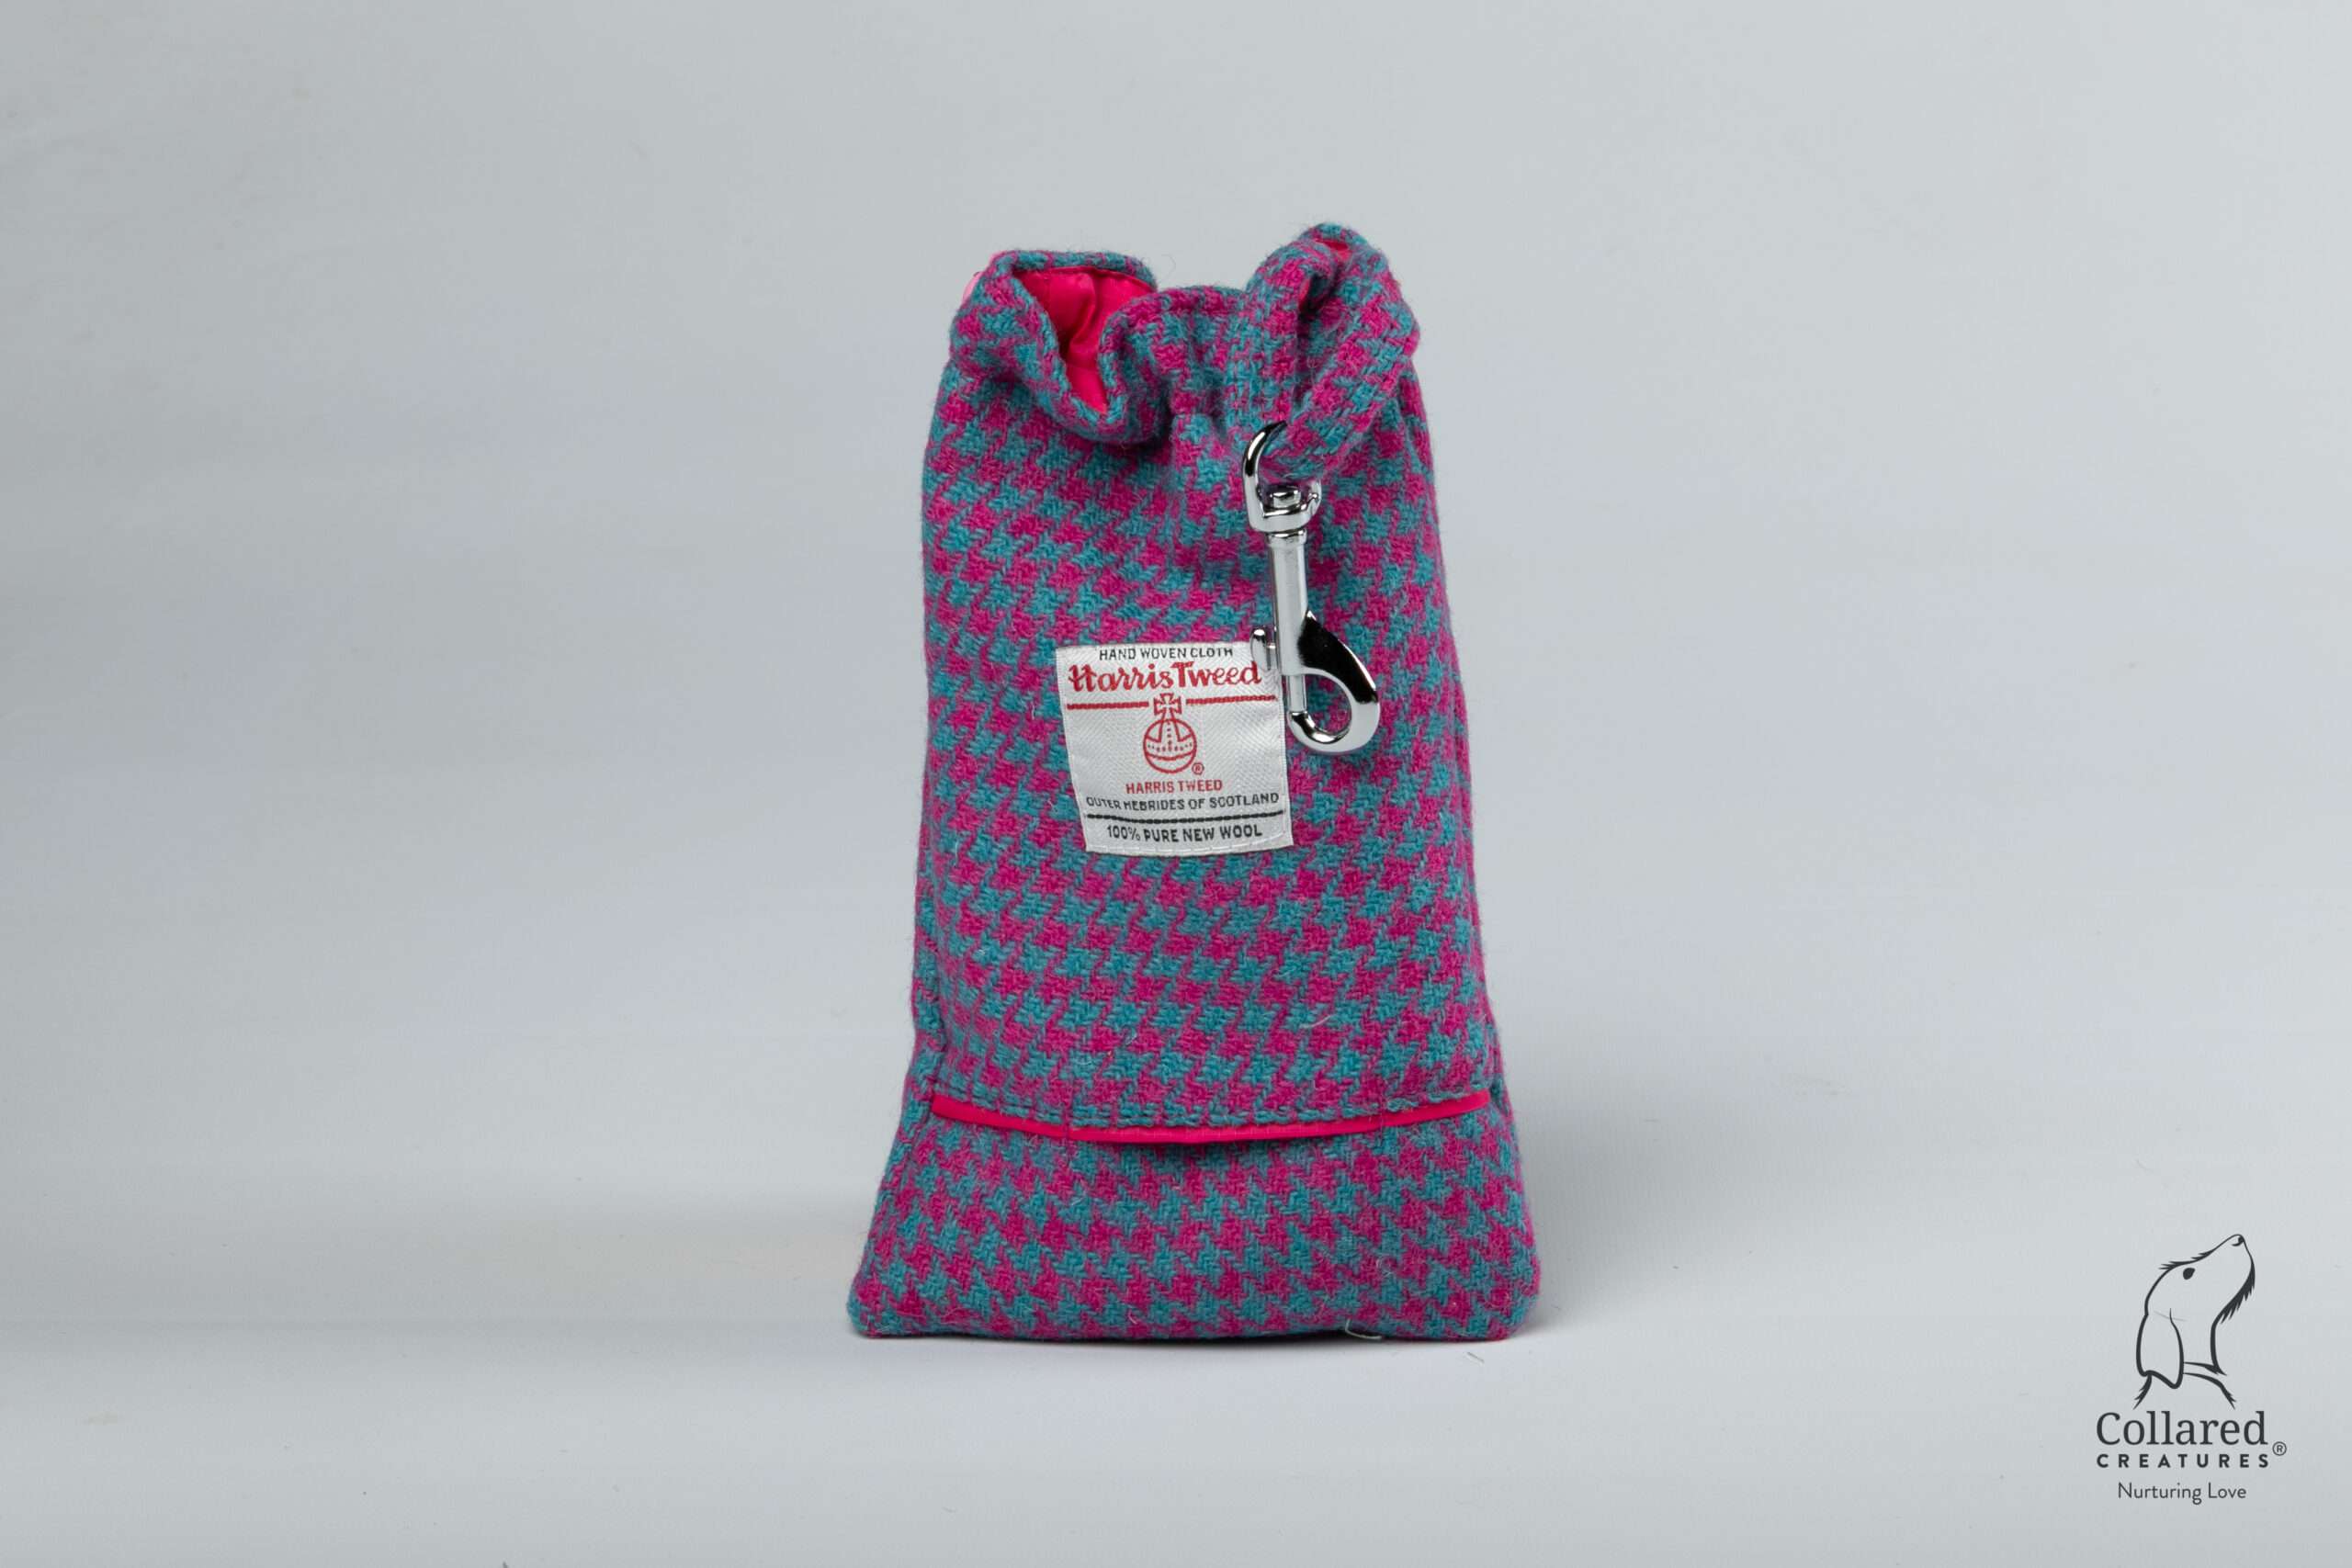 Collared Creatures Pink & Turquoise Houndstooth Harris Tweed Treat Bag With Built-In Poop Bag Dispenser